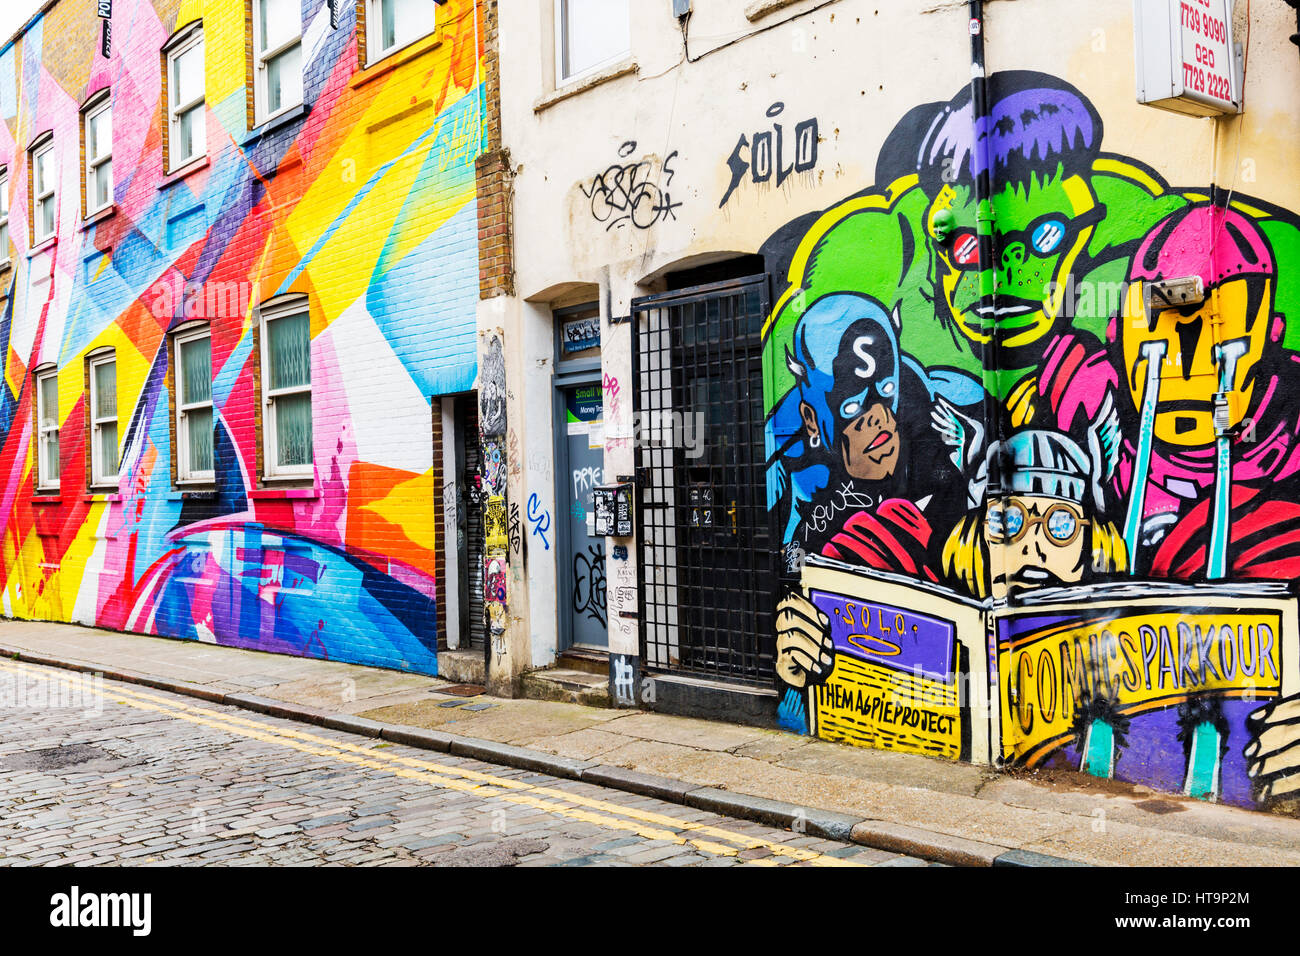 Bunte Comics Parkour Wandbild Graffiti an Wand und bunt bemalte Gebäude in Shoreditch, London im September Stockfoto